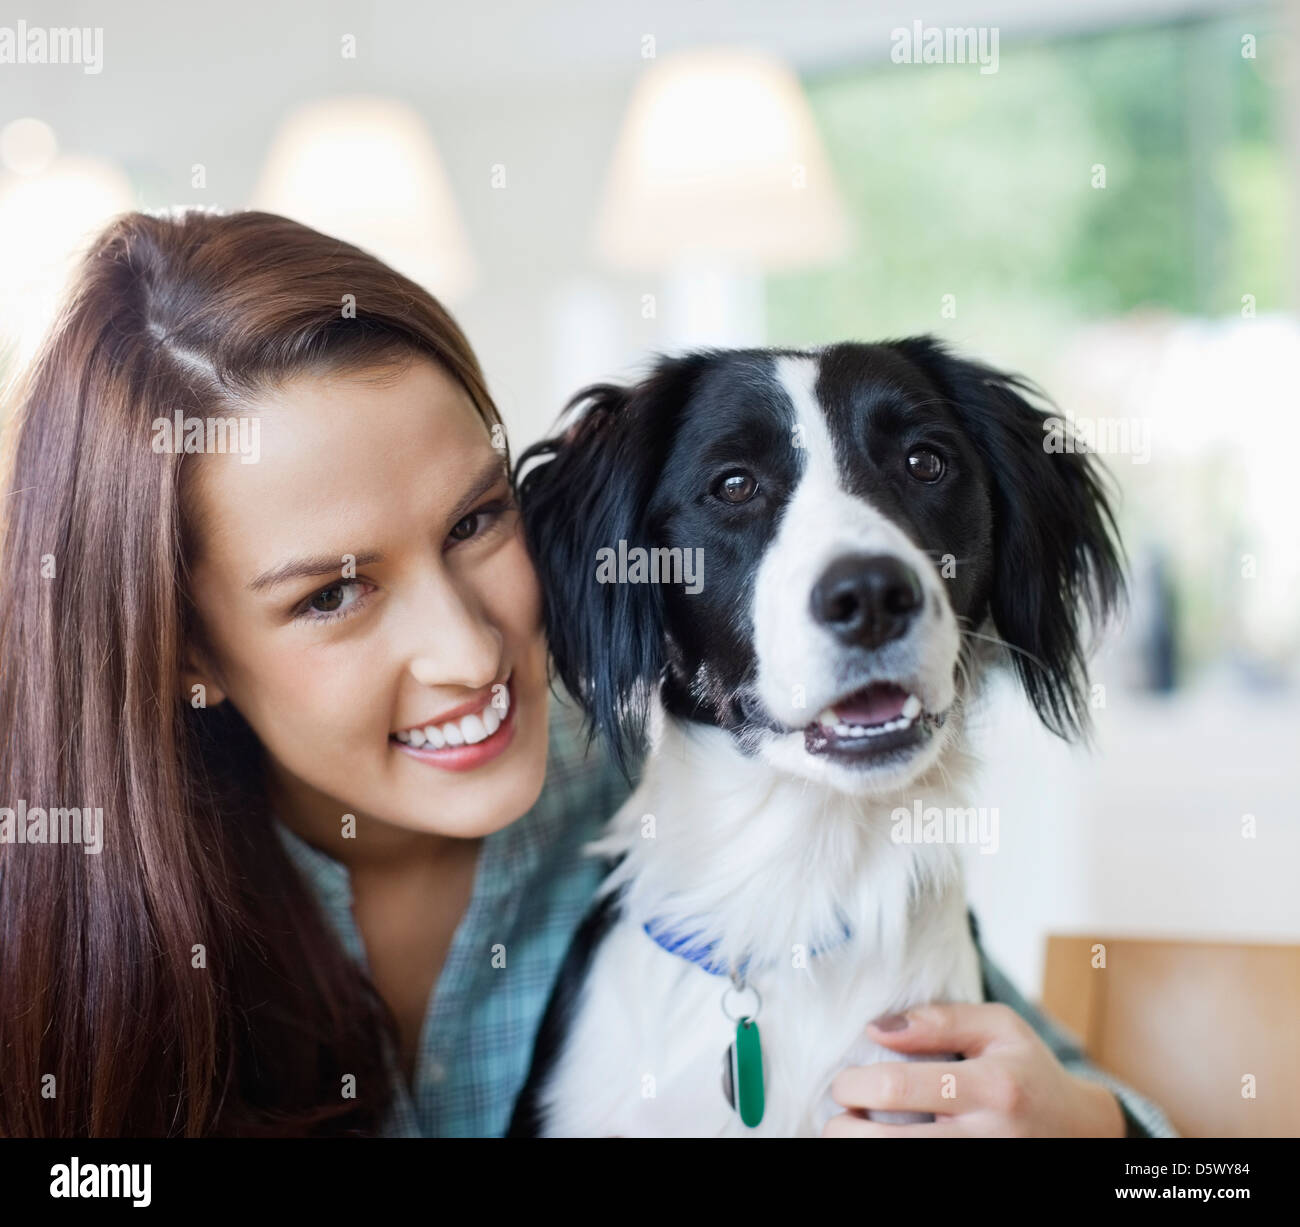 Smiling woman hugging dog indoors Stock Photo